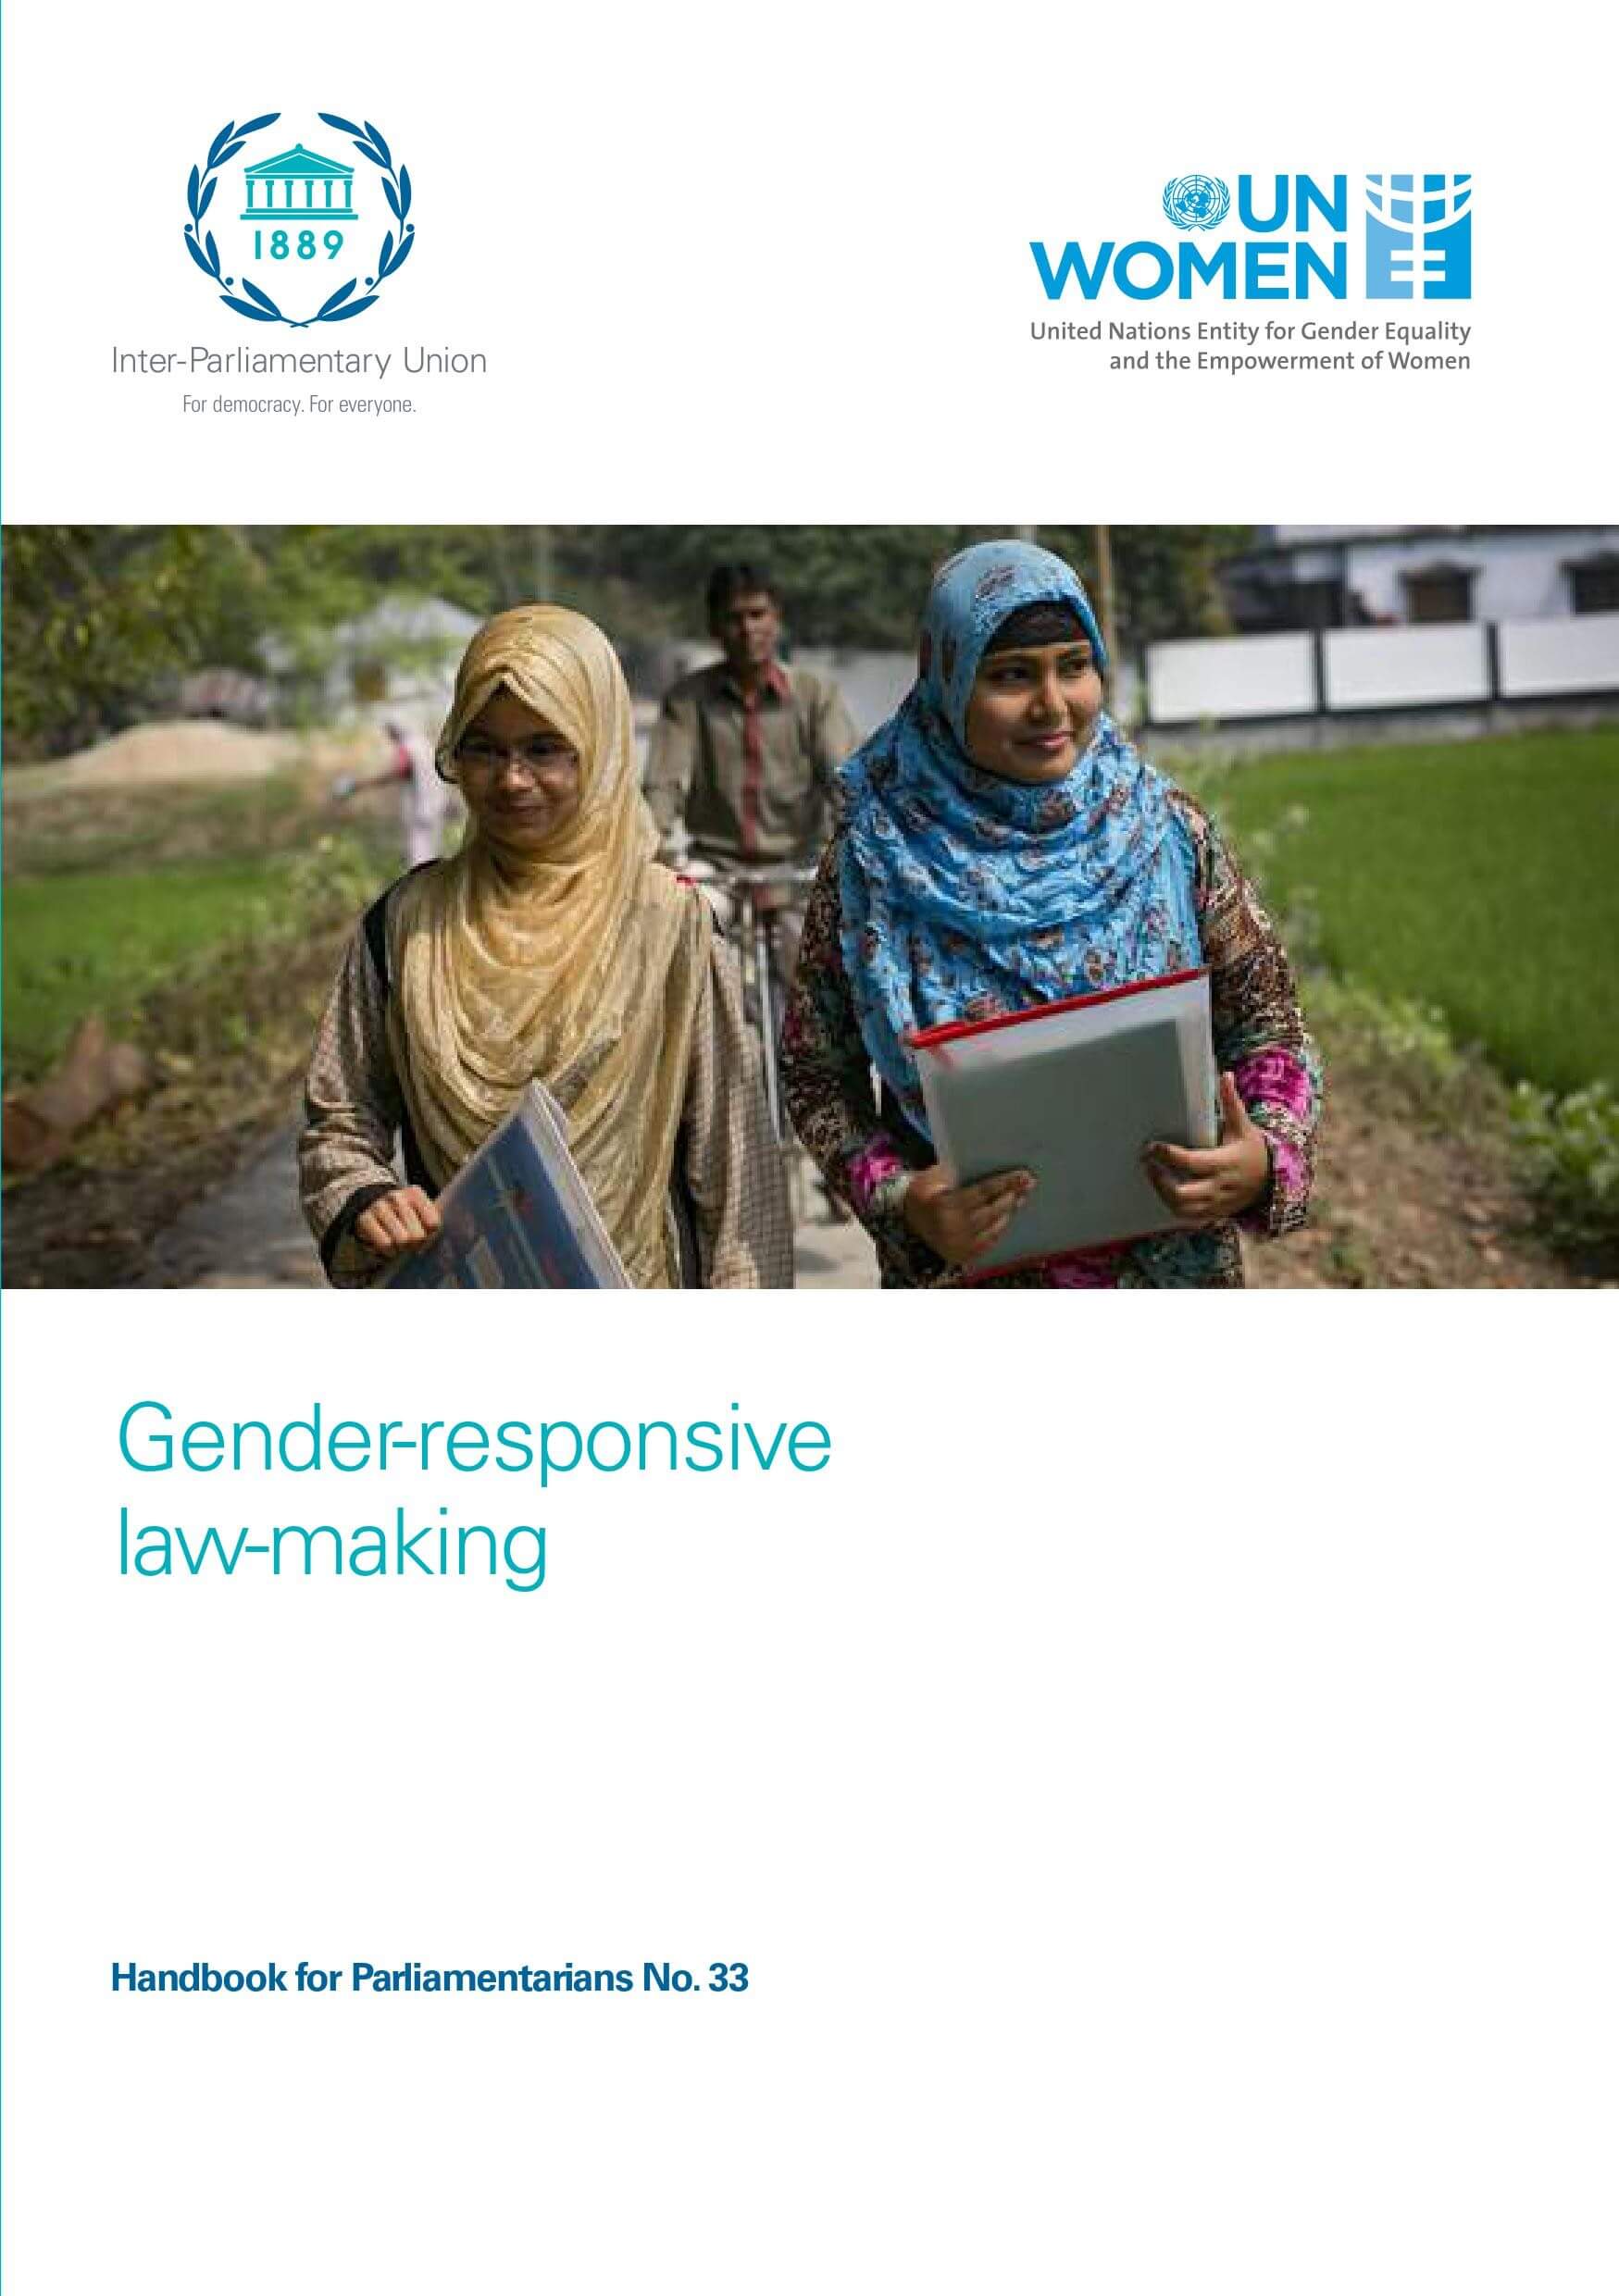 Handbook on gender-responsive law-making